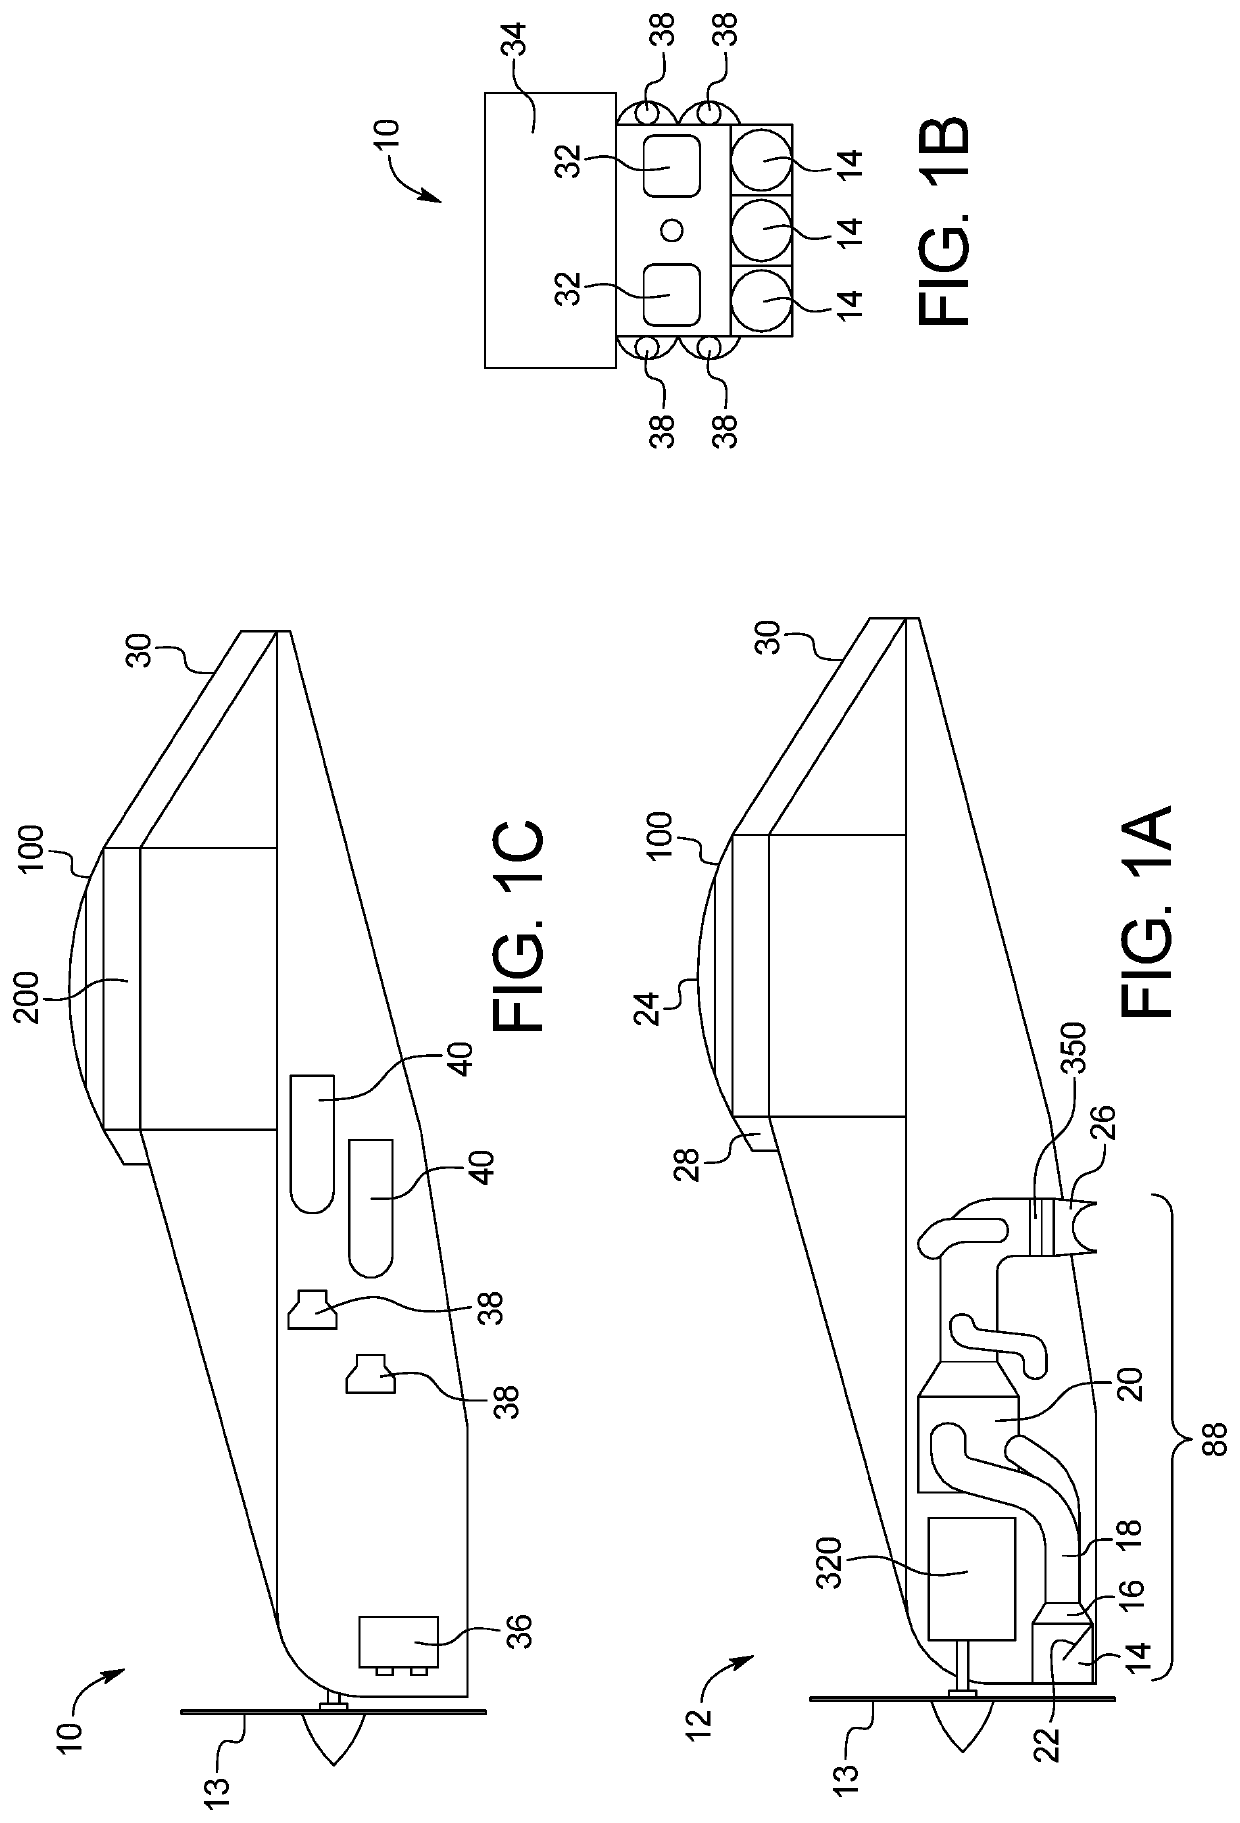 Vertical Lift Single Engine Vehicle System